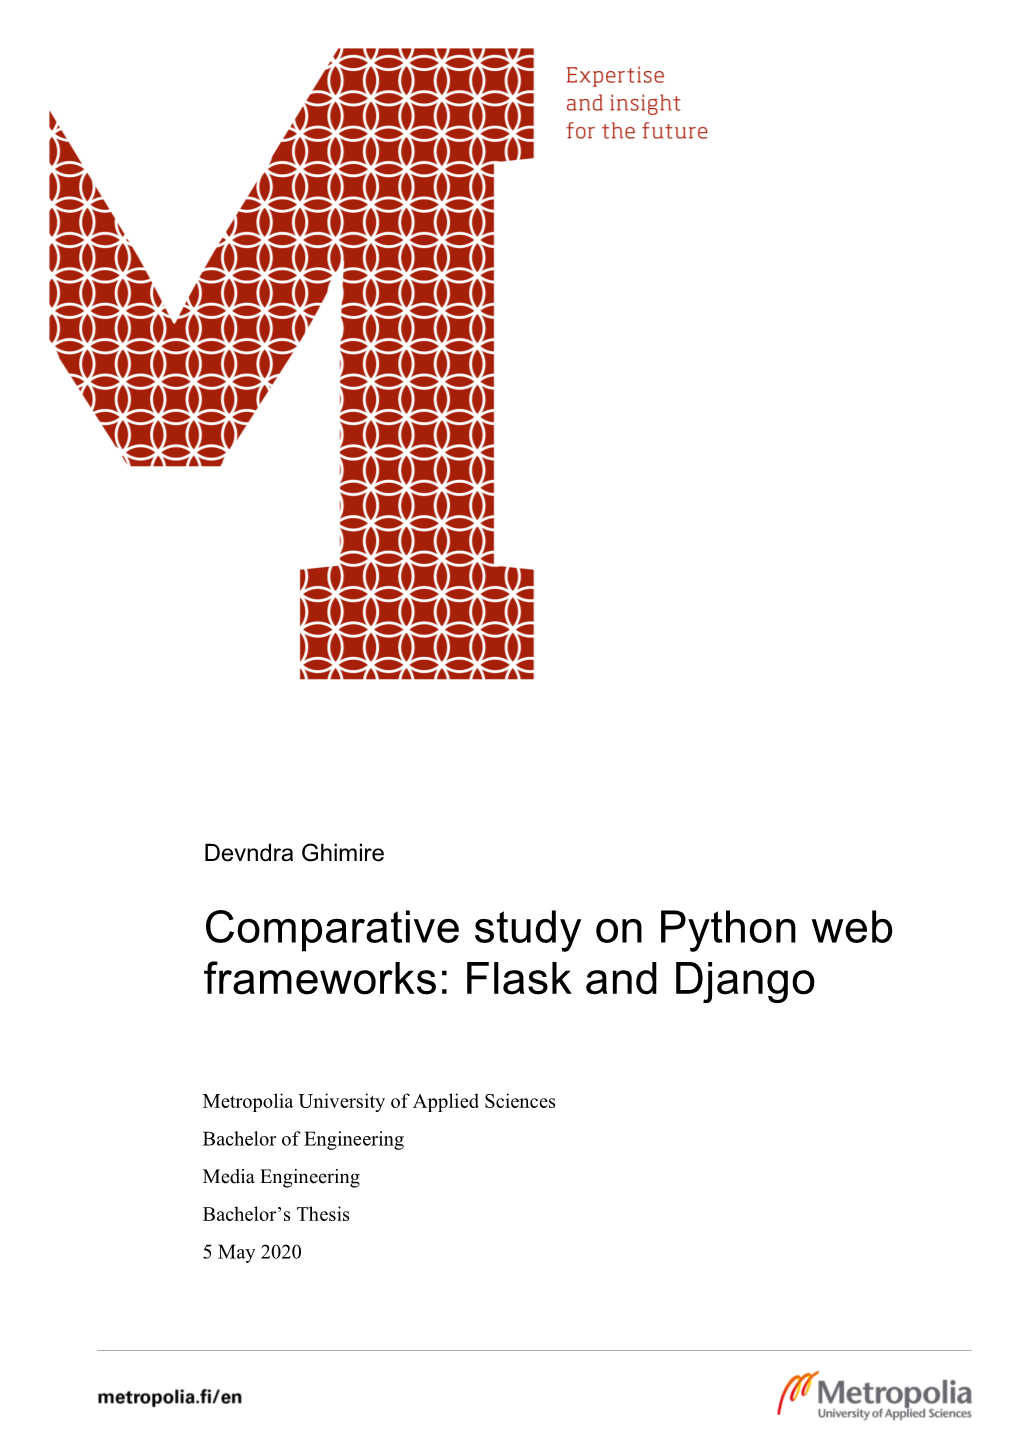 Comparative Study on Python Web Frameworks: Flask and Django